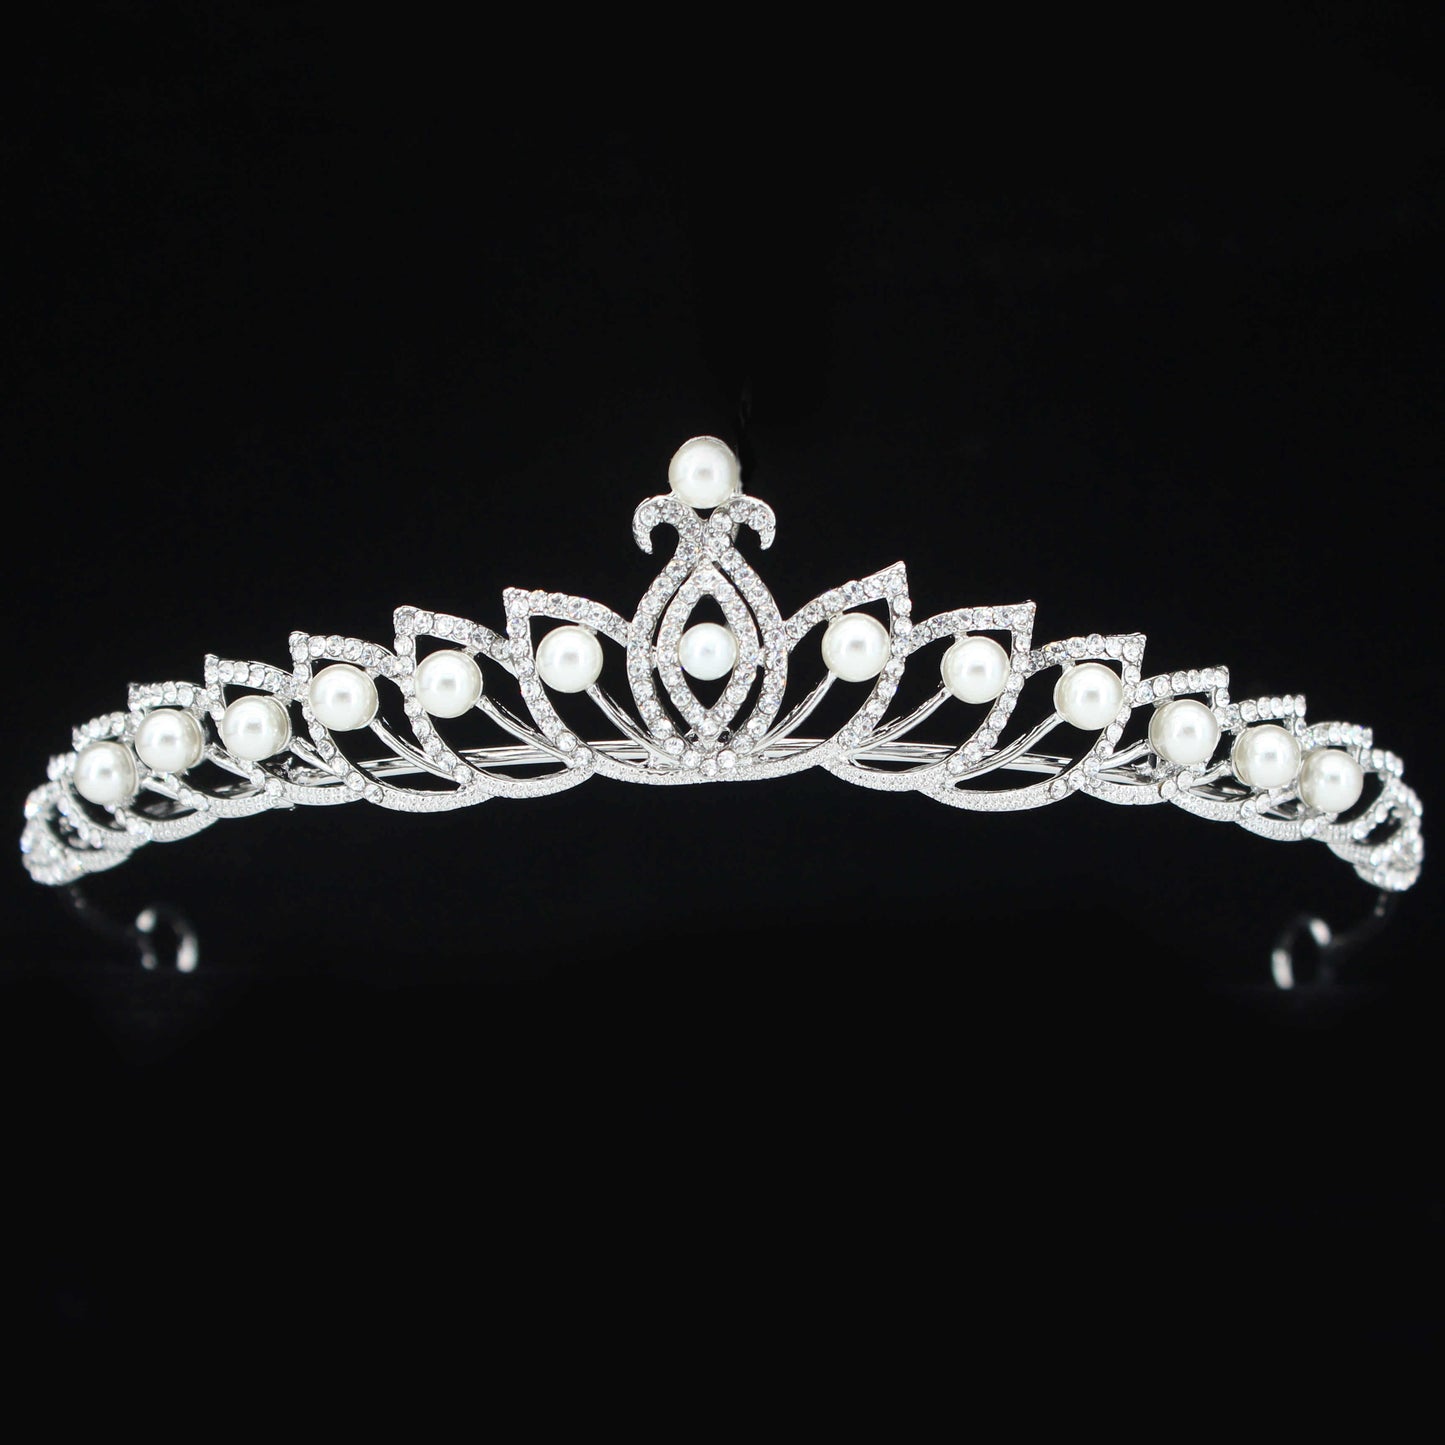 Gorgeous Crystal Bridal Tiara Crown Bride Headbands Women Girl Headpiece Prom Hair Ornaments Wedding Head Jewelry Accessories